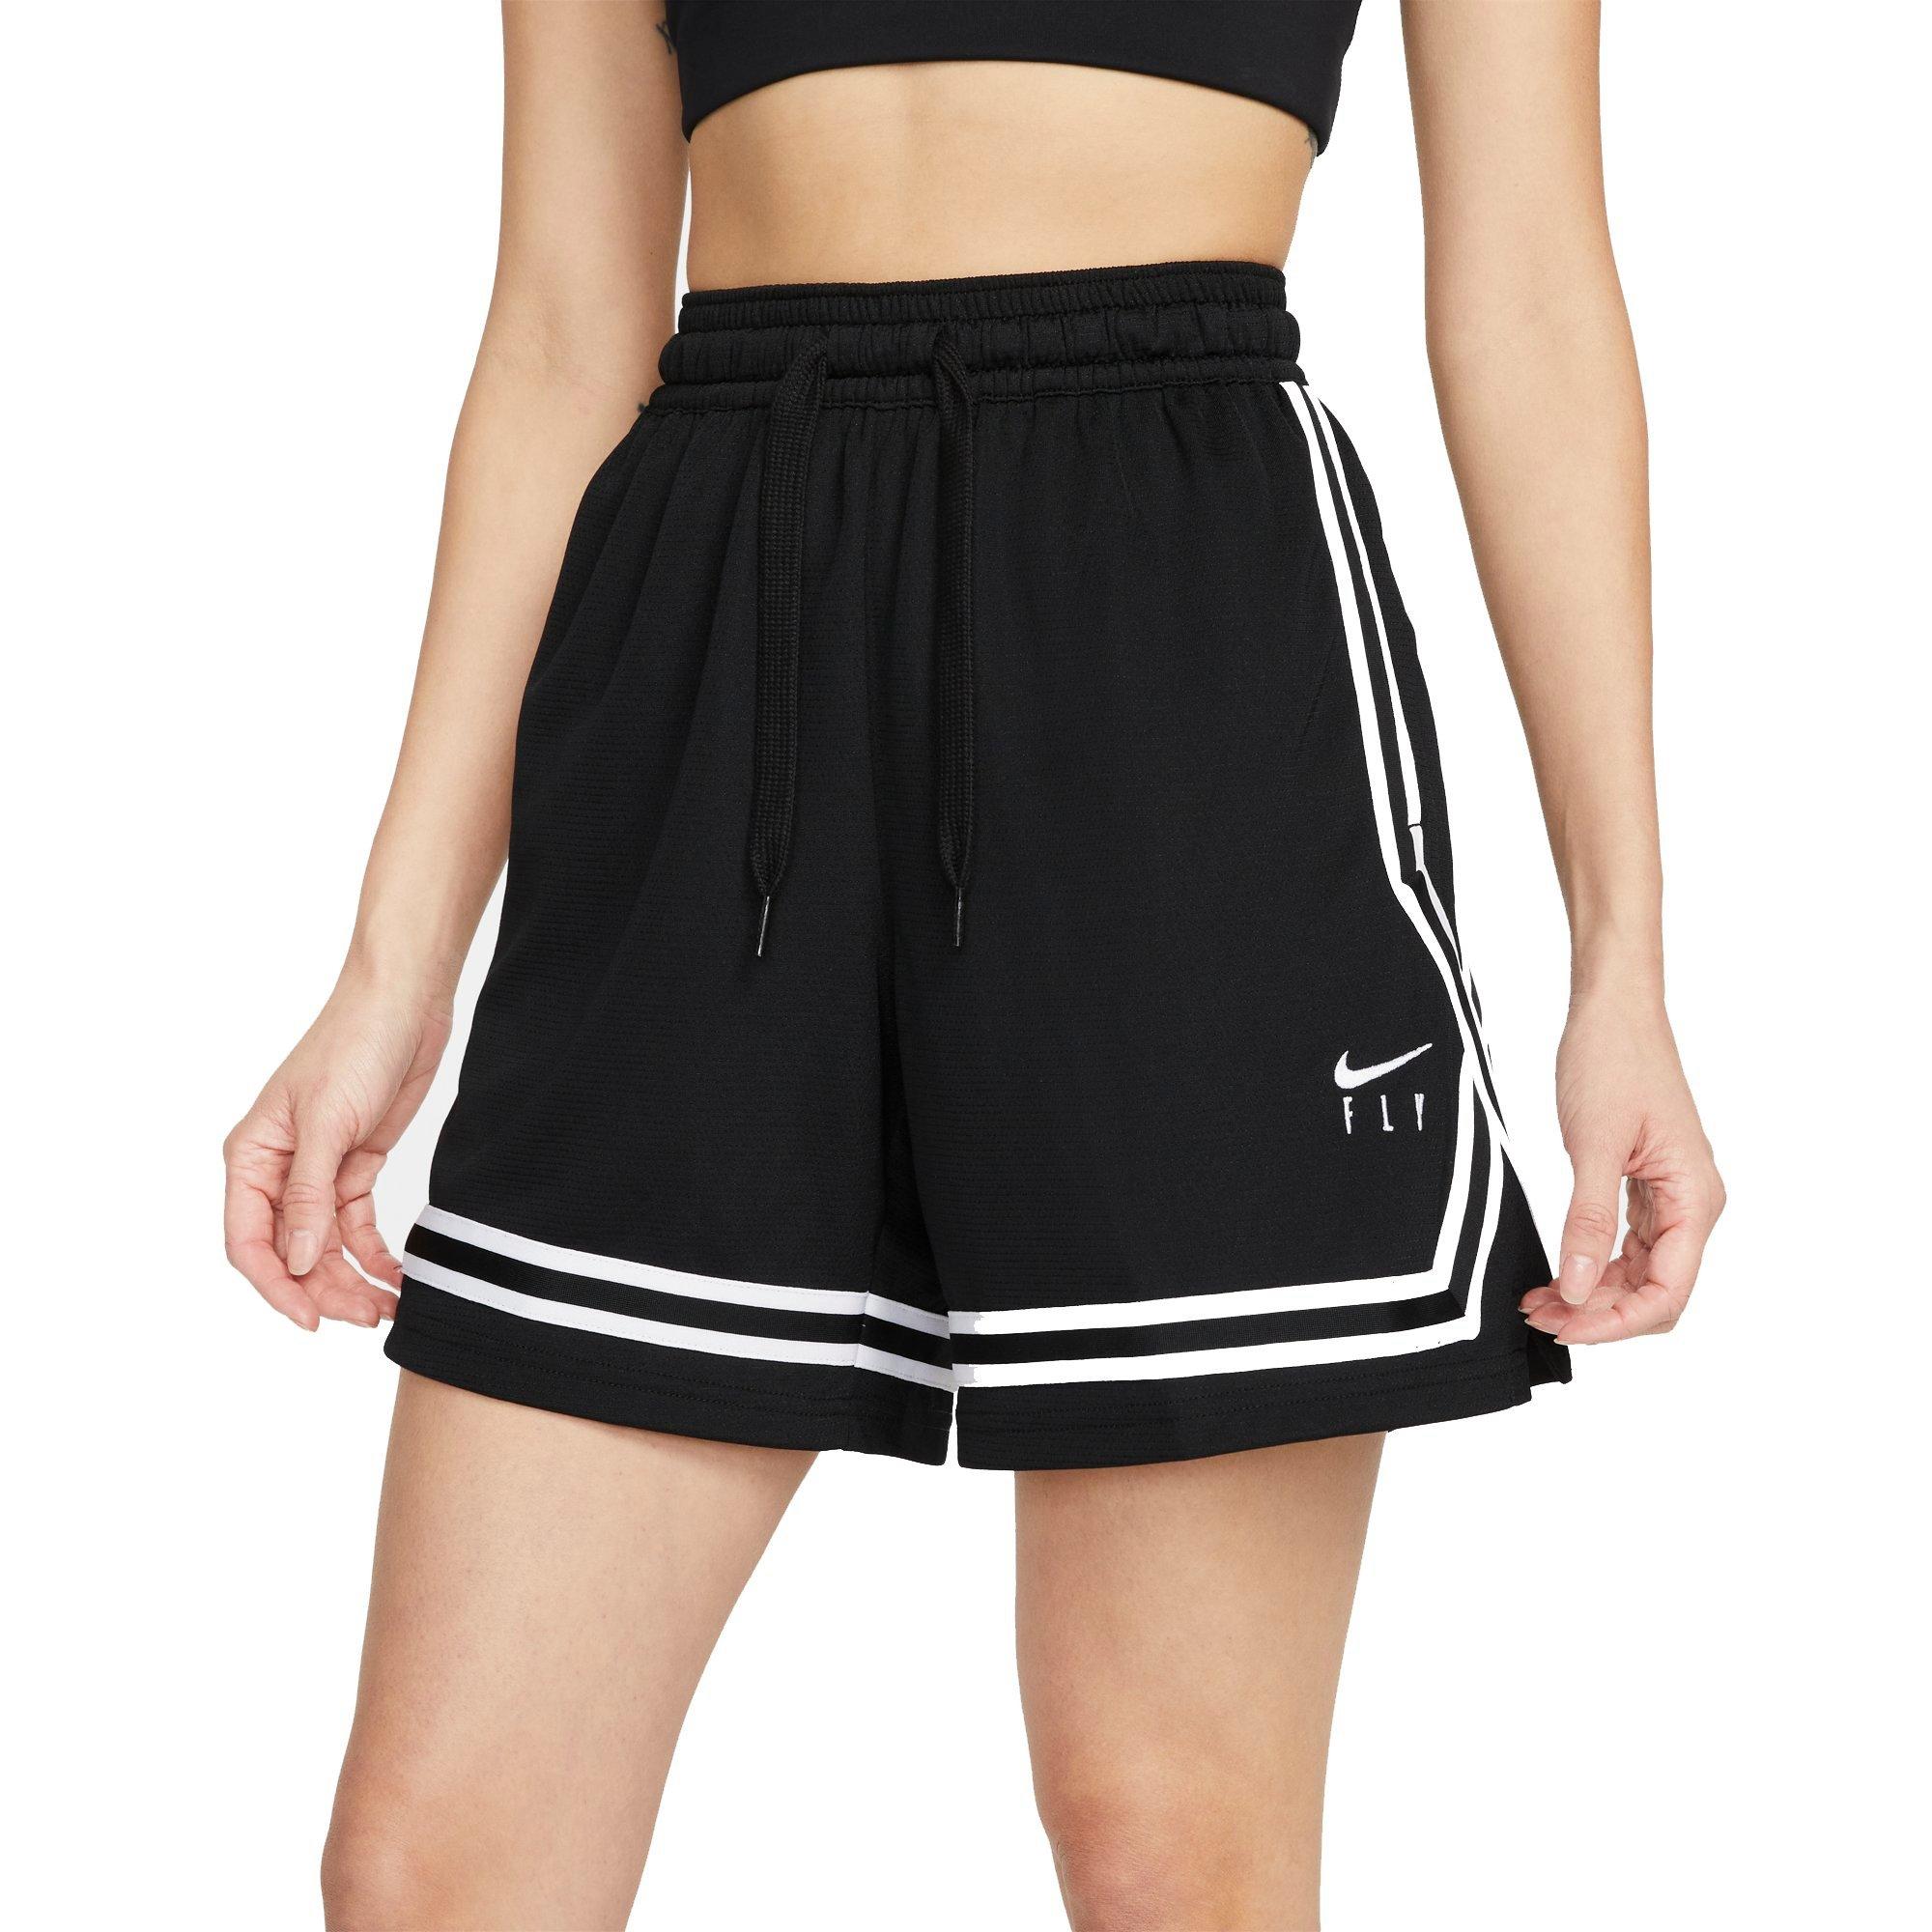 Nike, Shorts, Nike Fly Drifit Womens Pink Basketball Shorts Size S